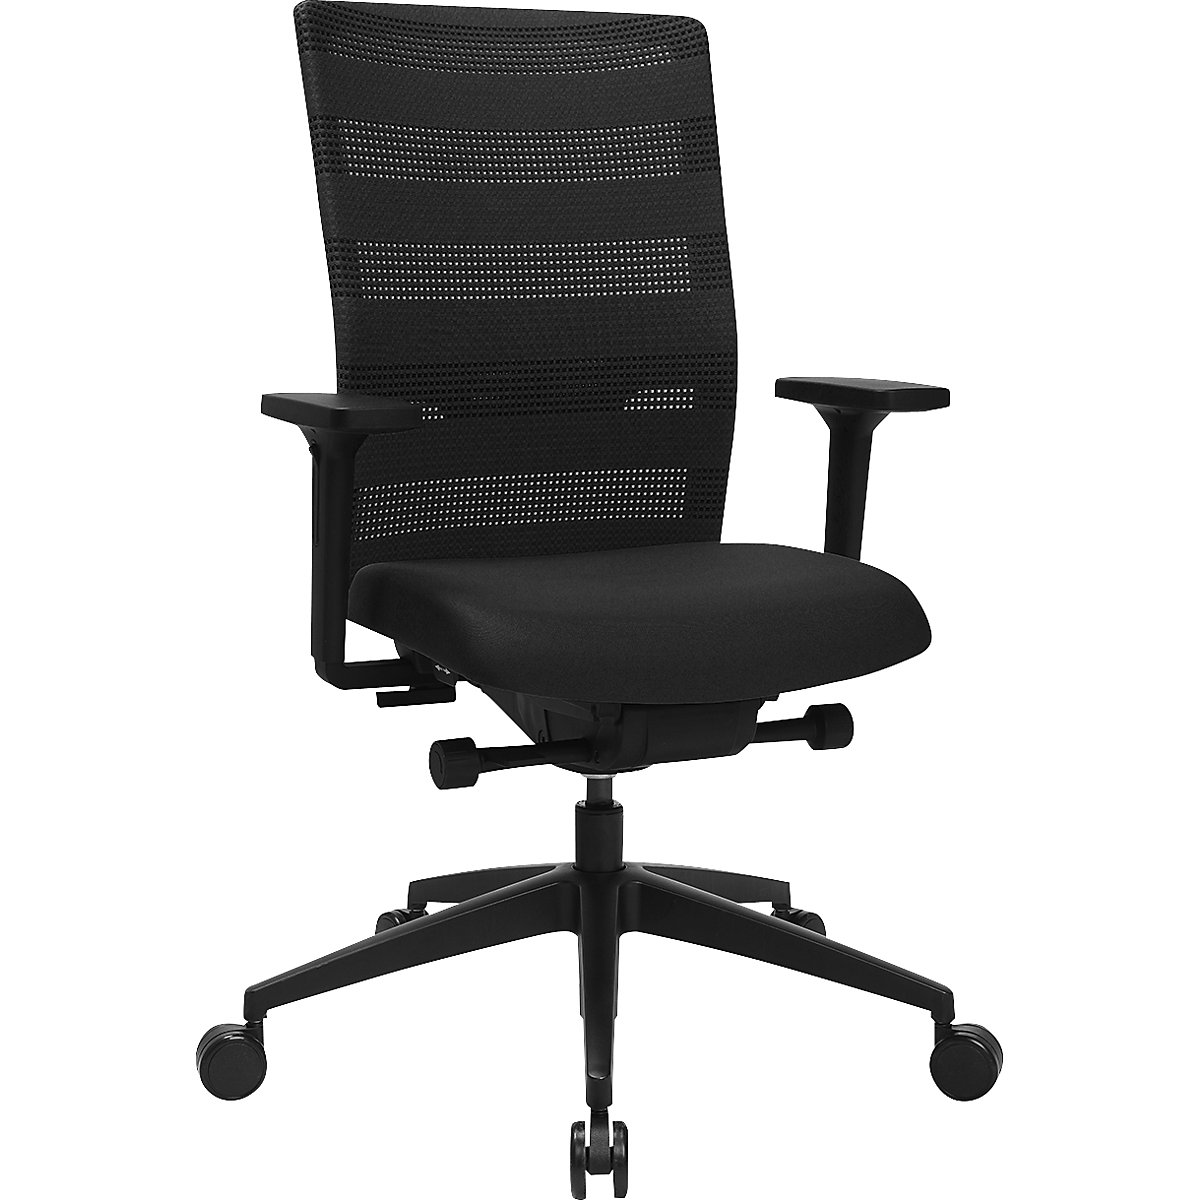 SITNESS AirWork office swivel chair - Topstar